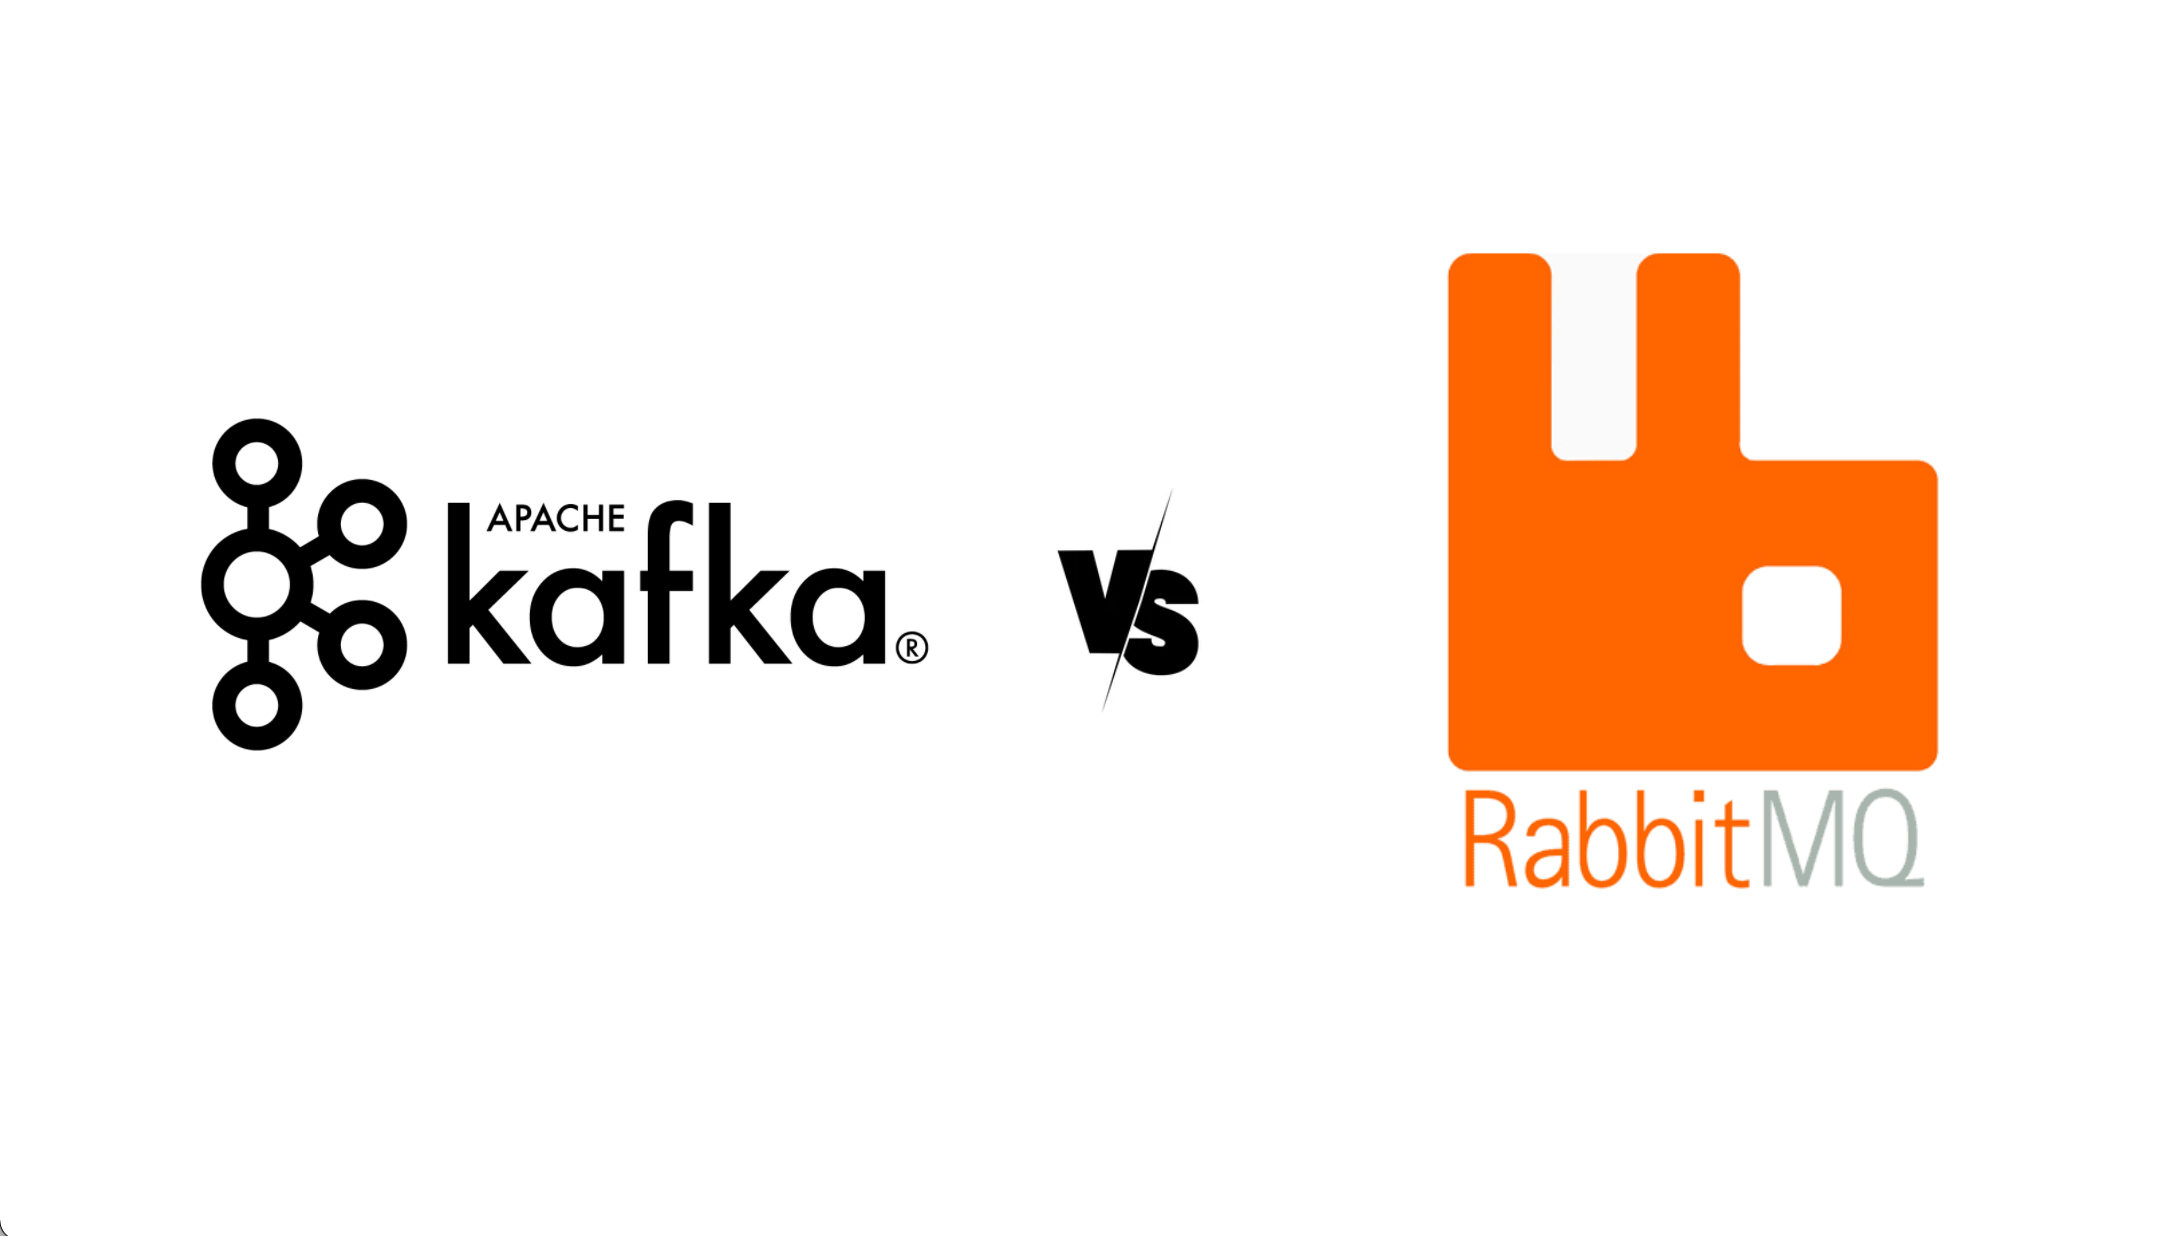 Differences between RabbitMQ and Kafka